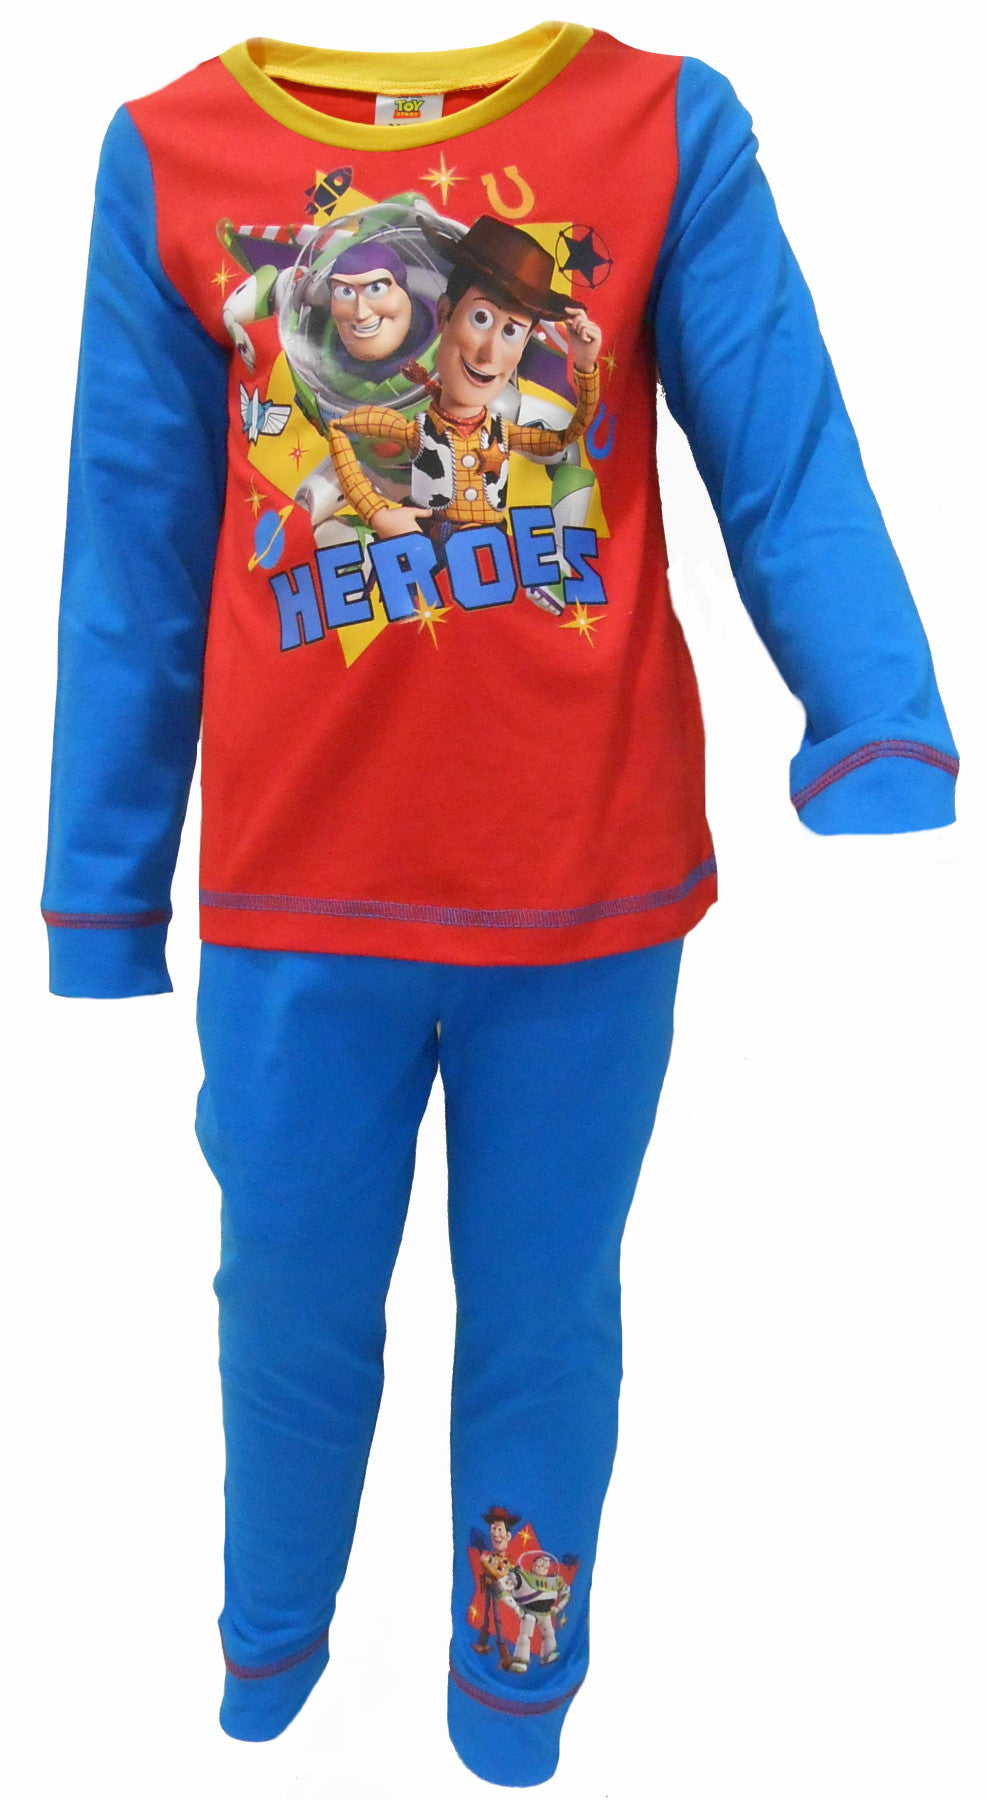 Disney Toy Story "Buzz & Woody Heroes" Boys Pyjamas18-24 months